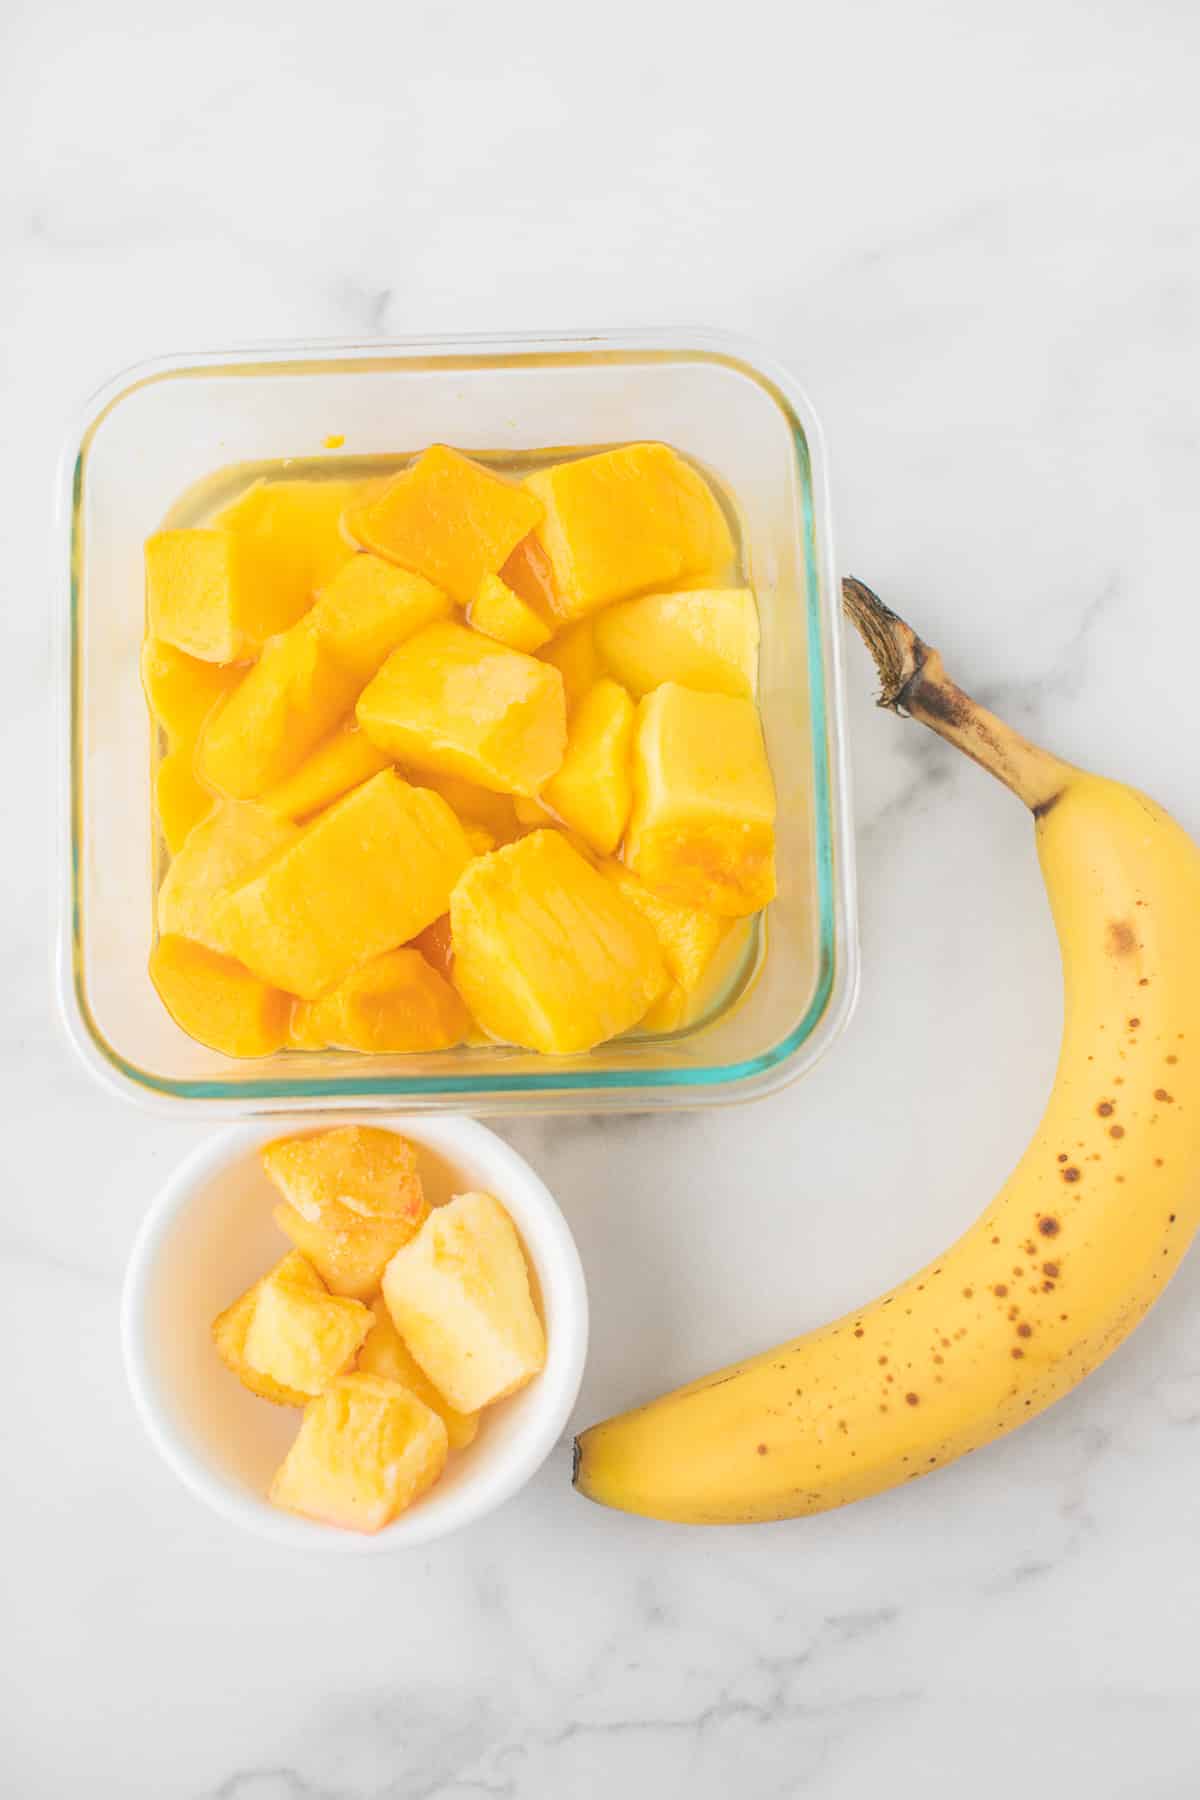 mango, pineapple, and banana